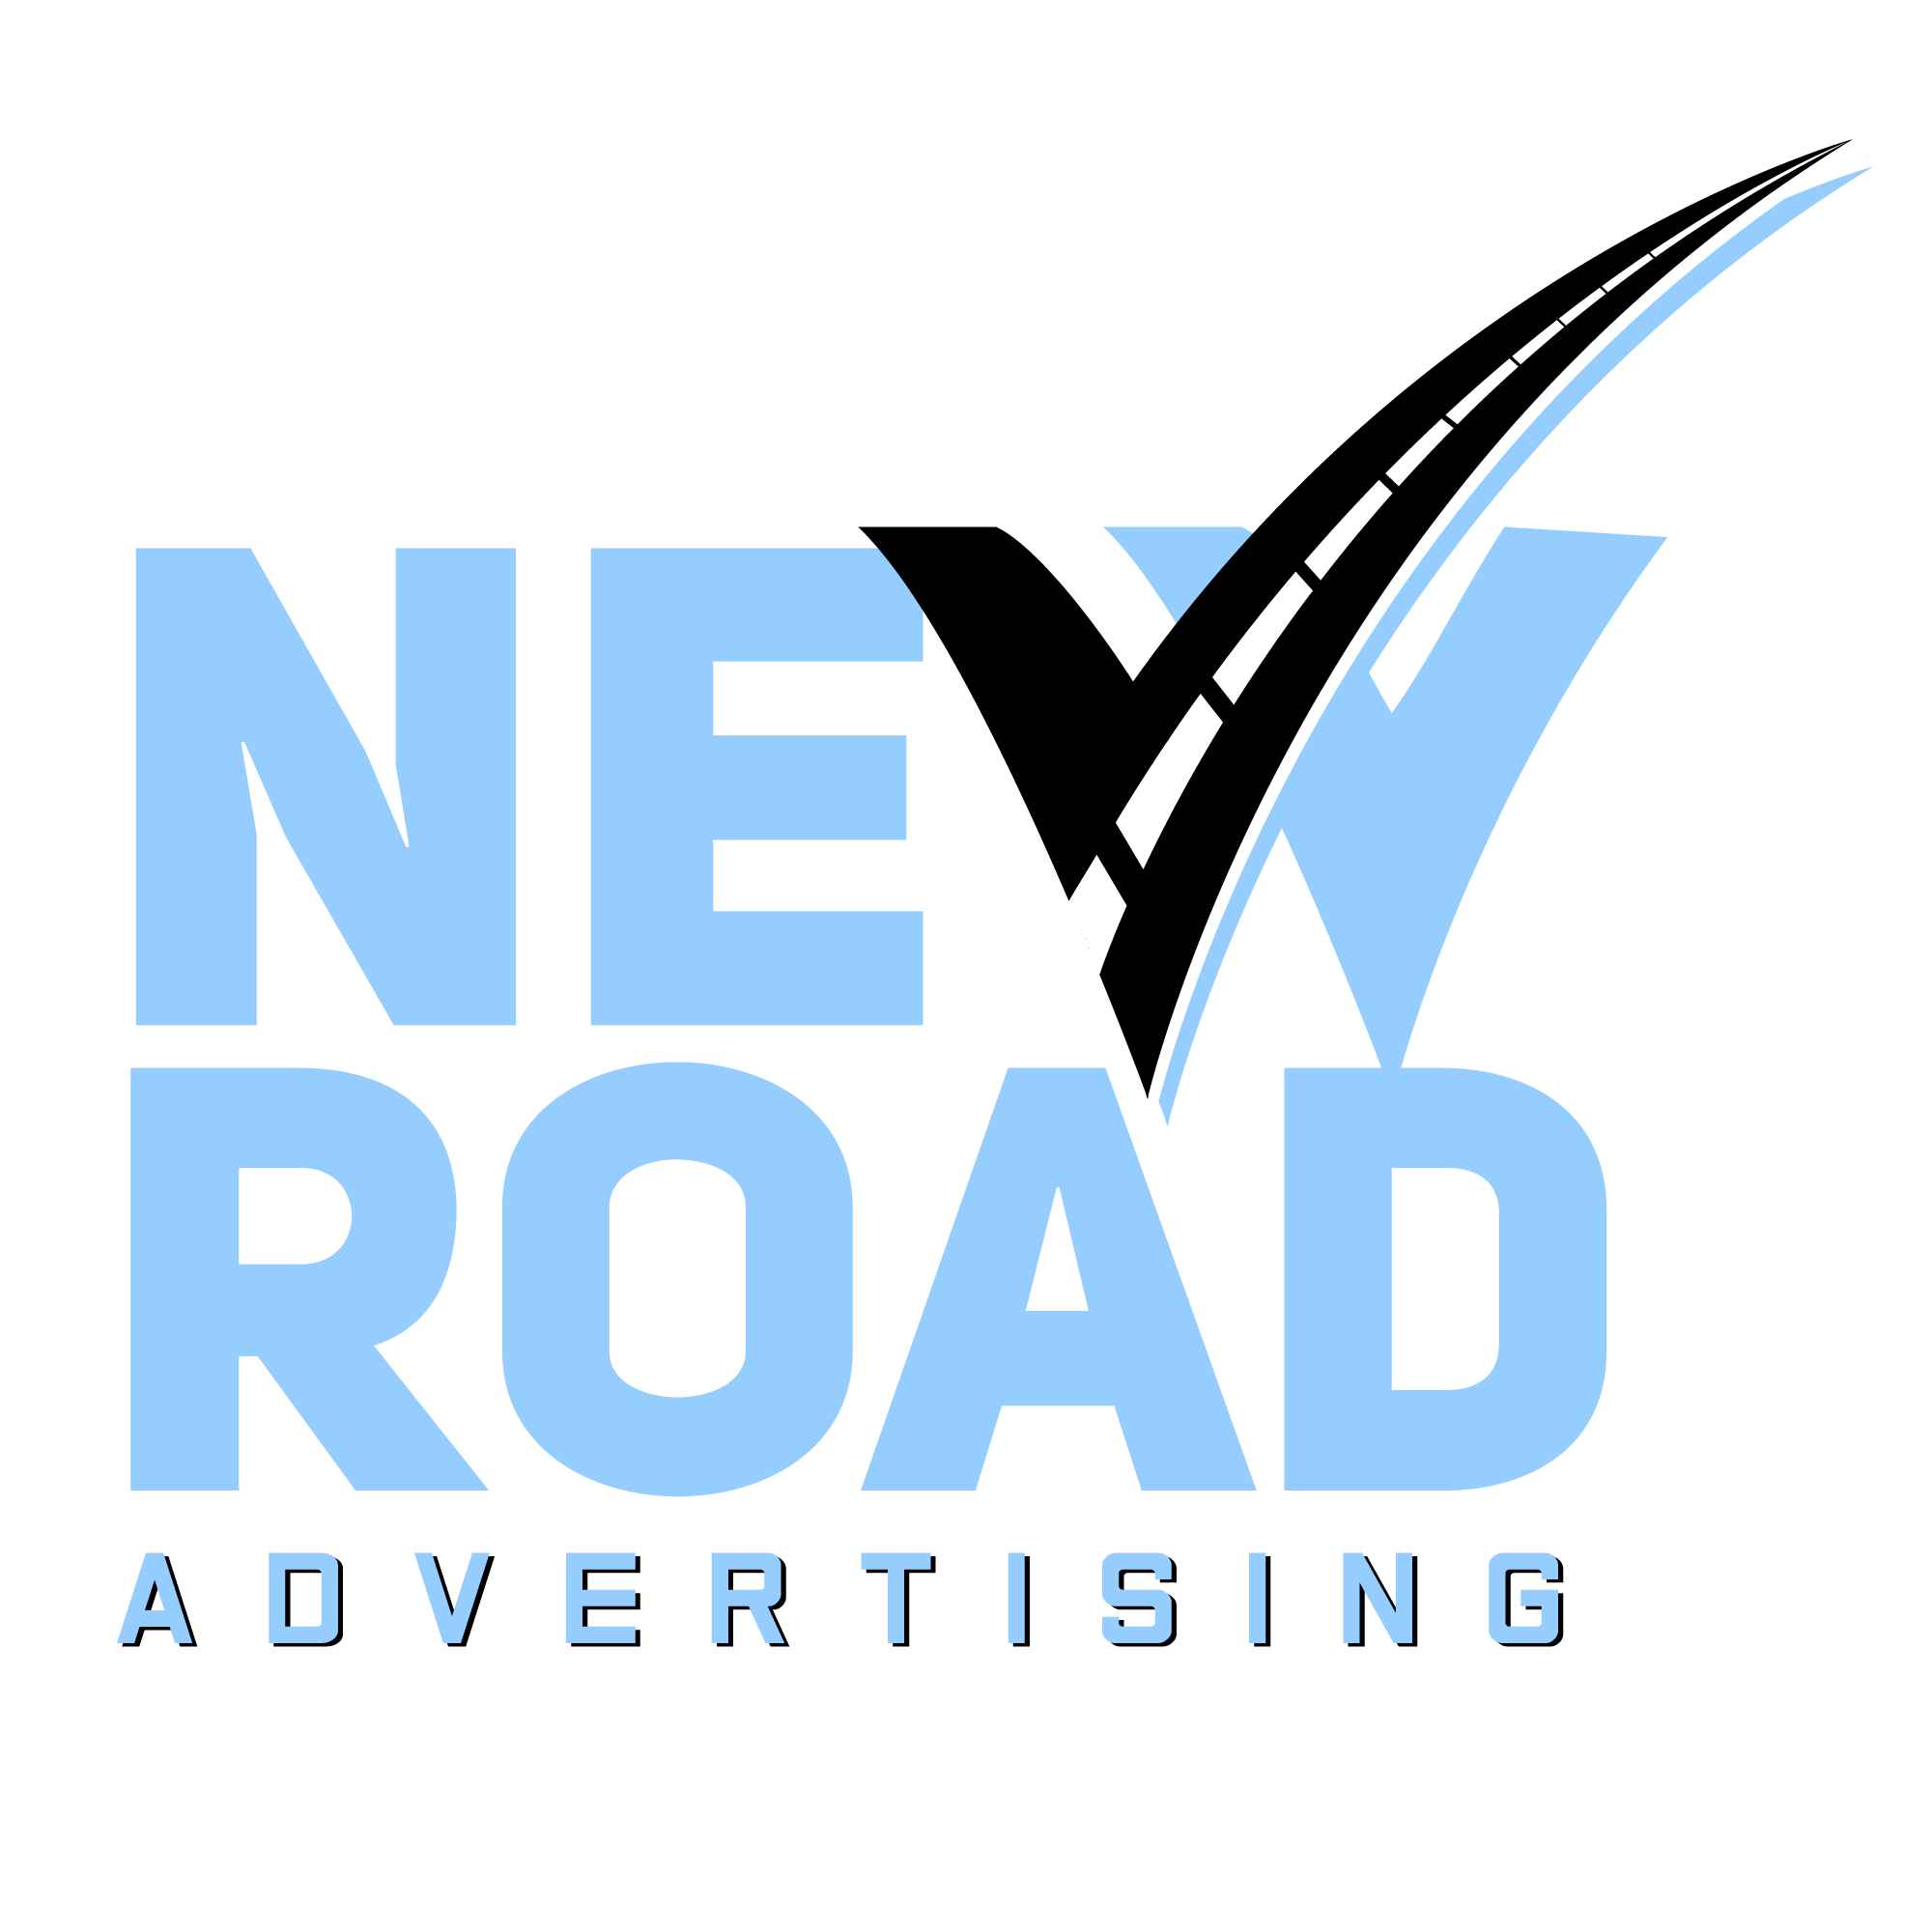 New Road Advertising